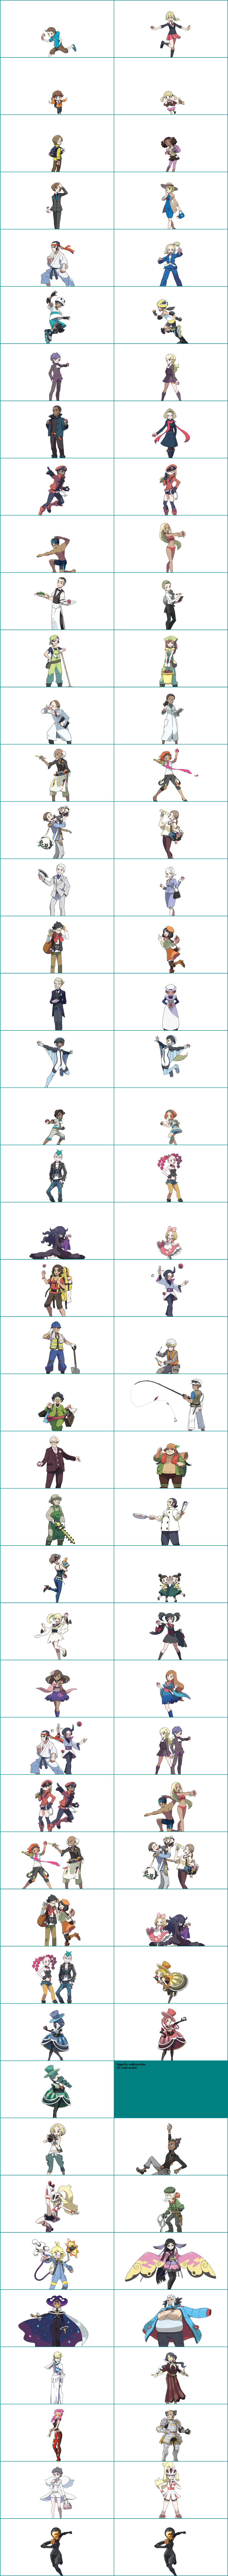 Pokémon X / Y - Trainer VS Faces (Small)